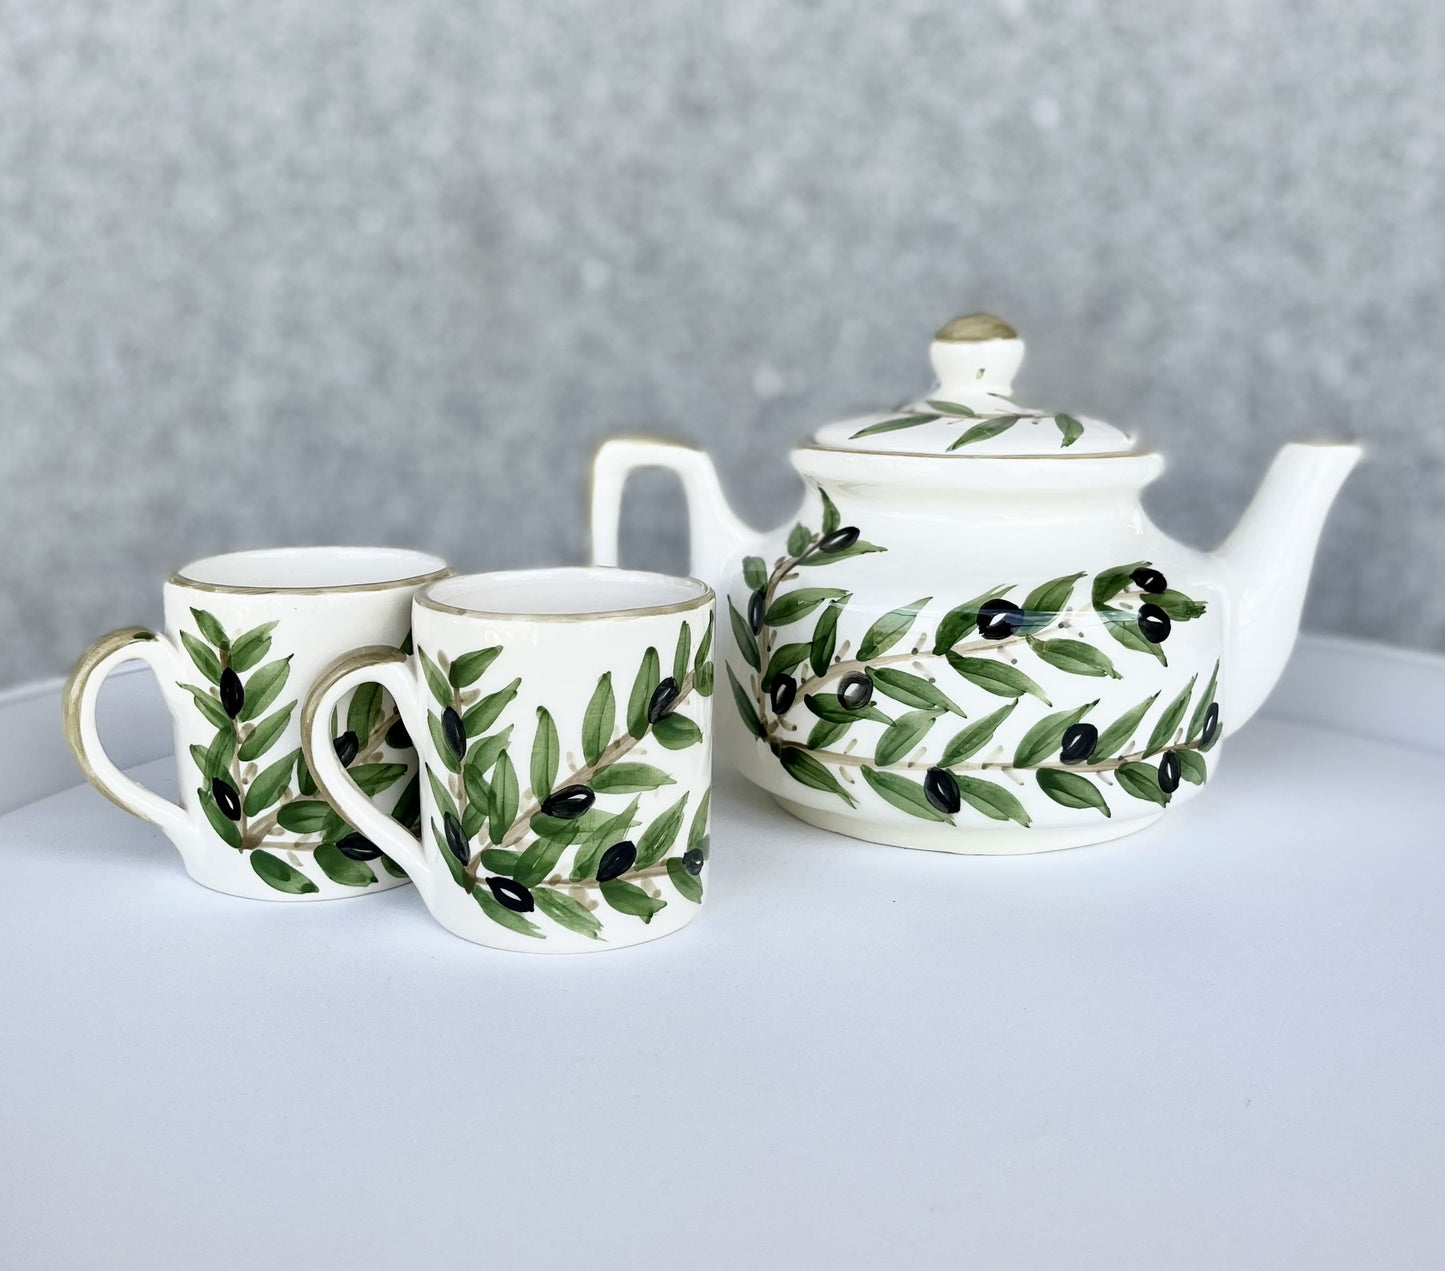 Nisf-Jbeil-Tea-Set-Palestine-Ceramic-Olive-Leaves-Leaf-Green-Cups-Pot-Mugs